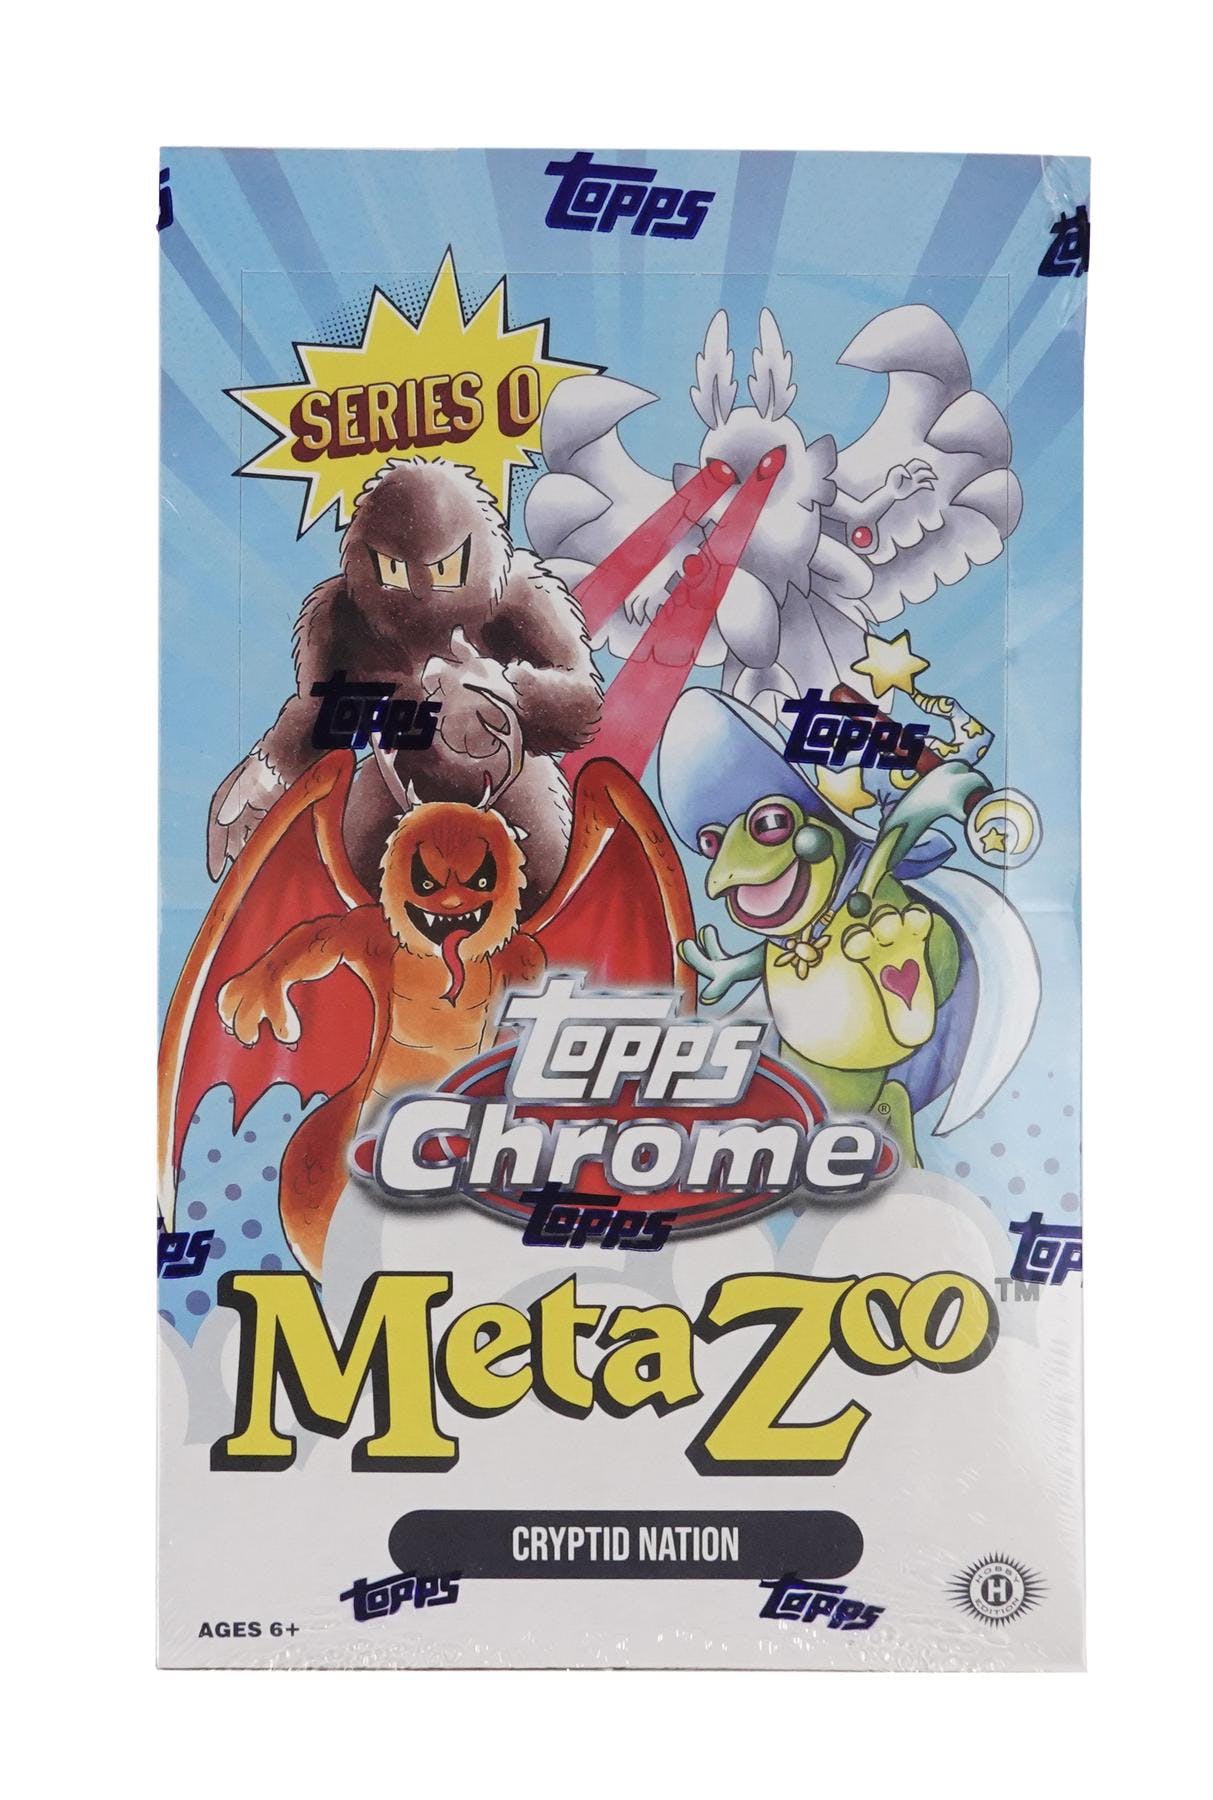 2022 TOPPS CHROME METAZOO SERIES 0 CRYPTID NATION HOBBY BOX